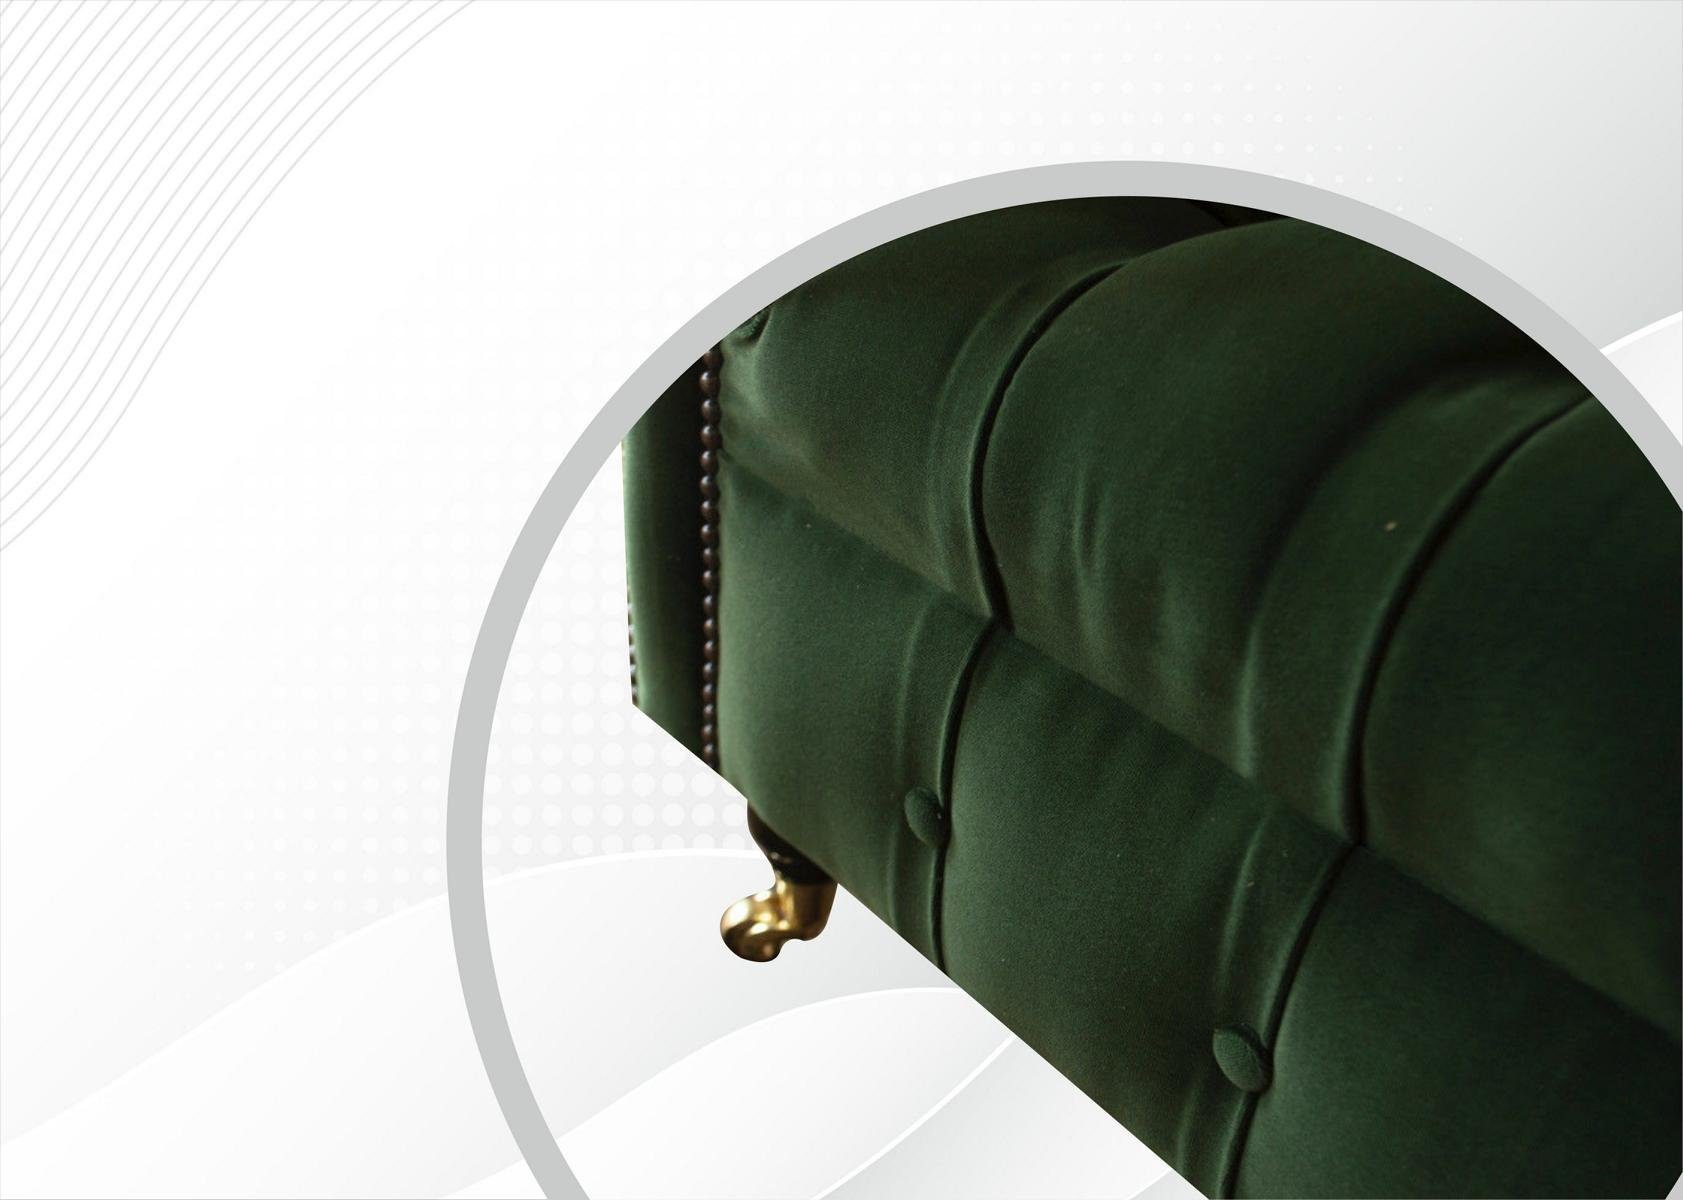 Sofa 3 Couch Design Chesterfield Chesterfield-Sofa, Sitzer cm 225 JVmoebel